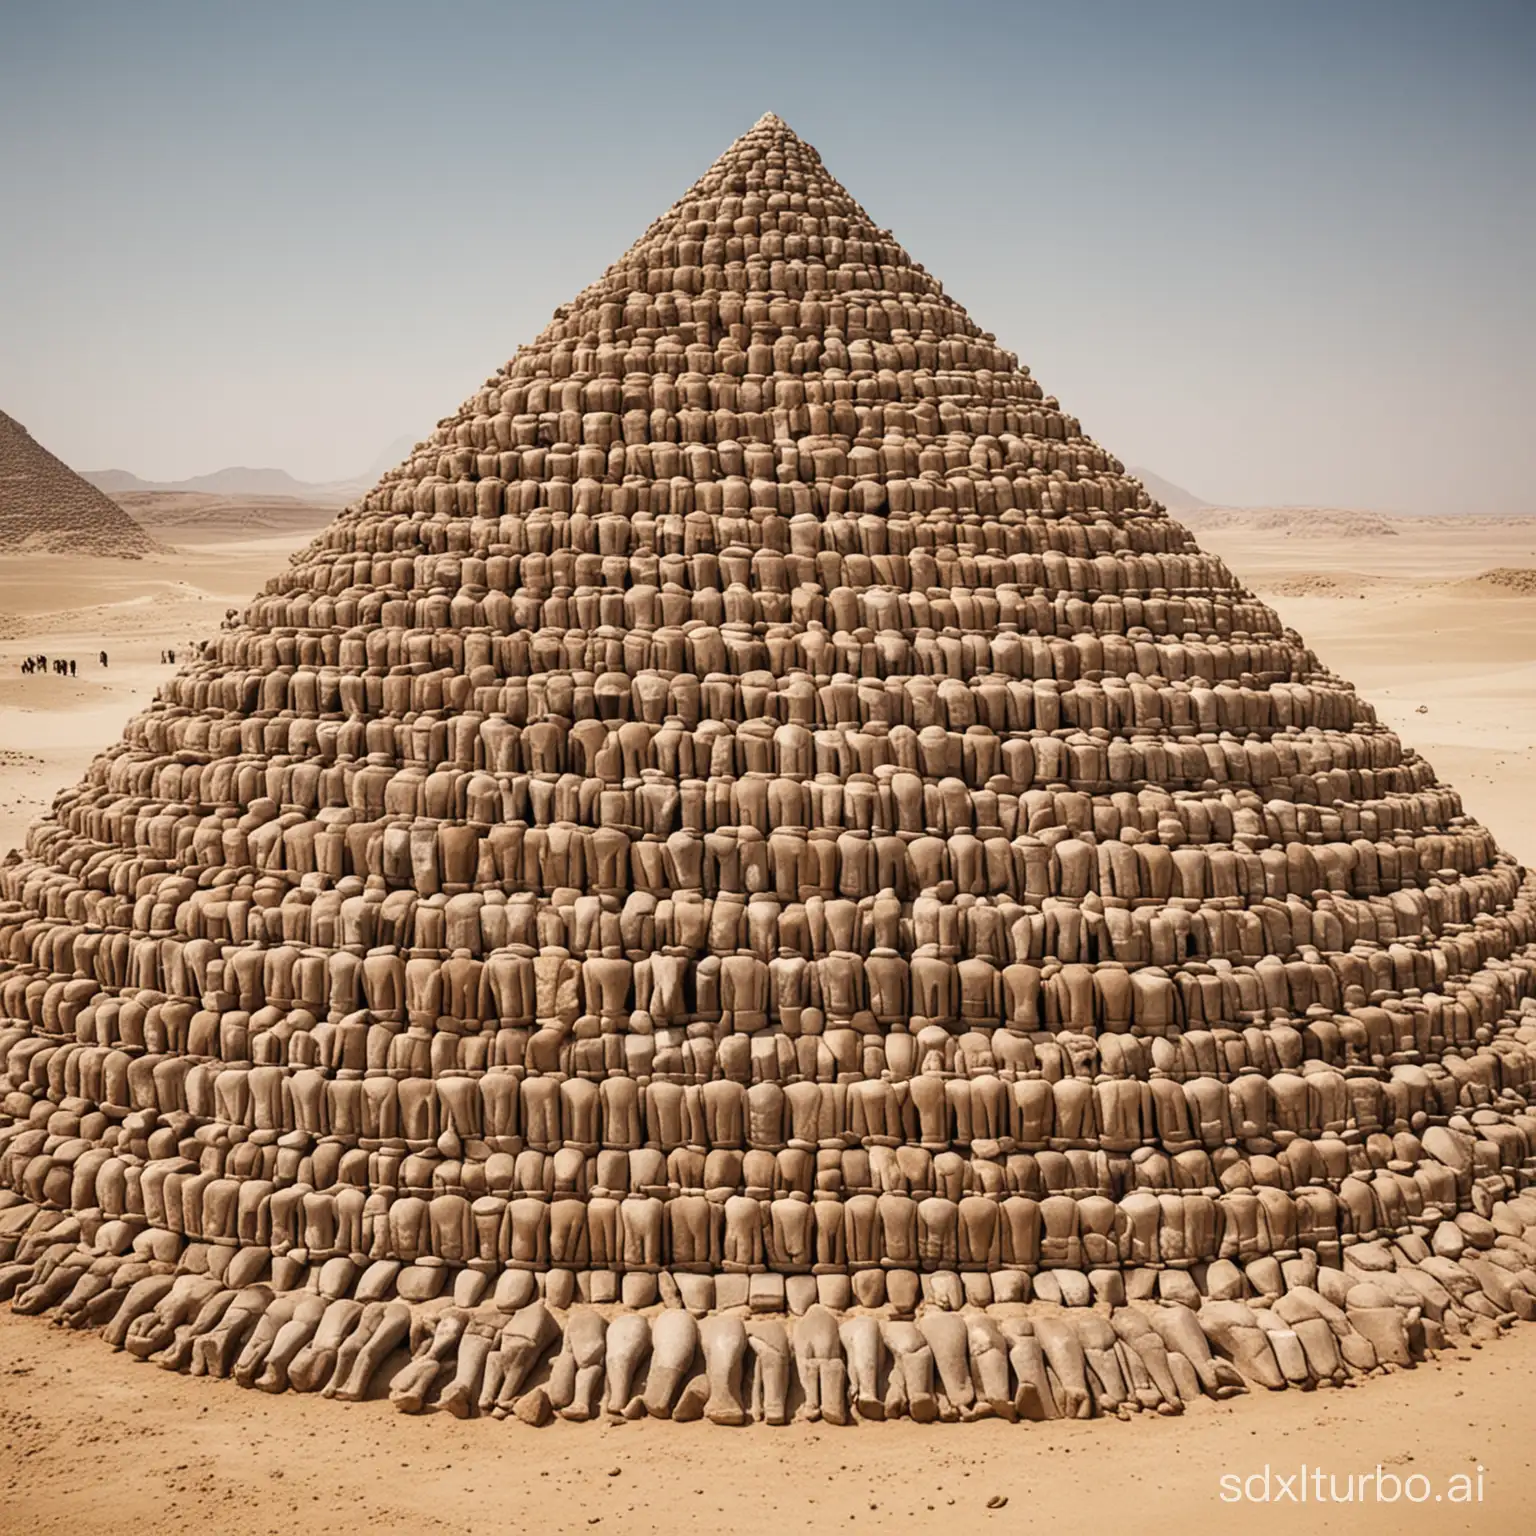 Human-Body-Pyramid-Sculpture-Creative-Artistic-Formation